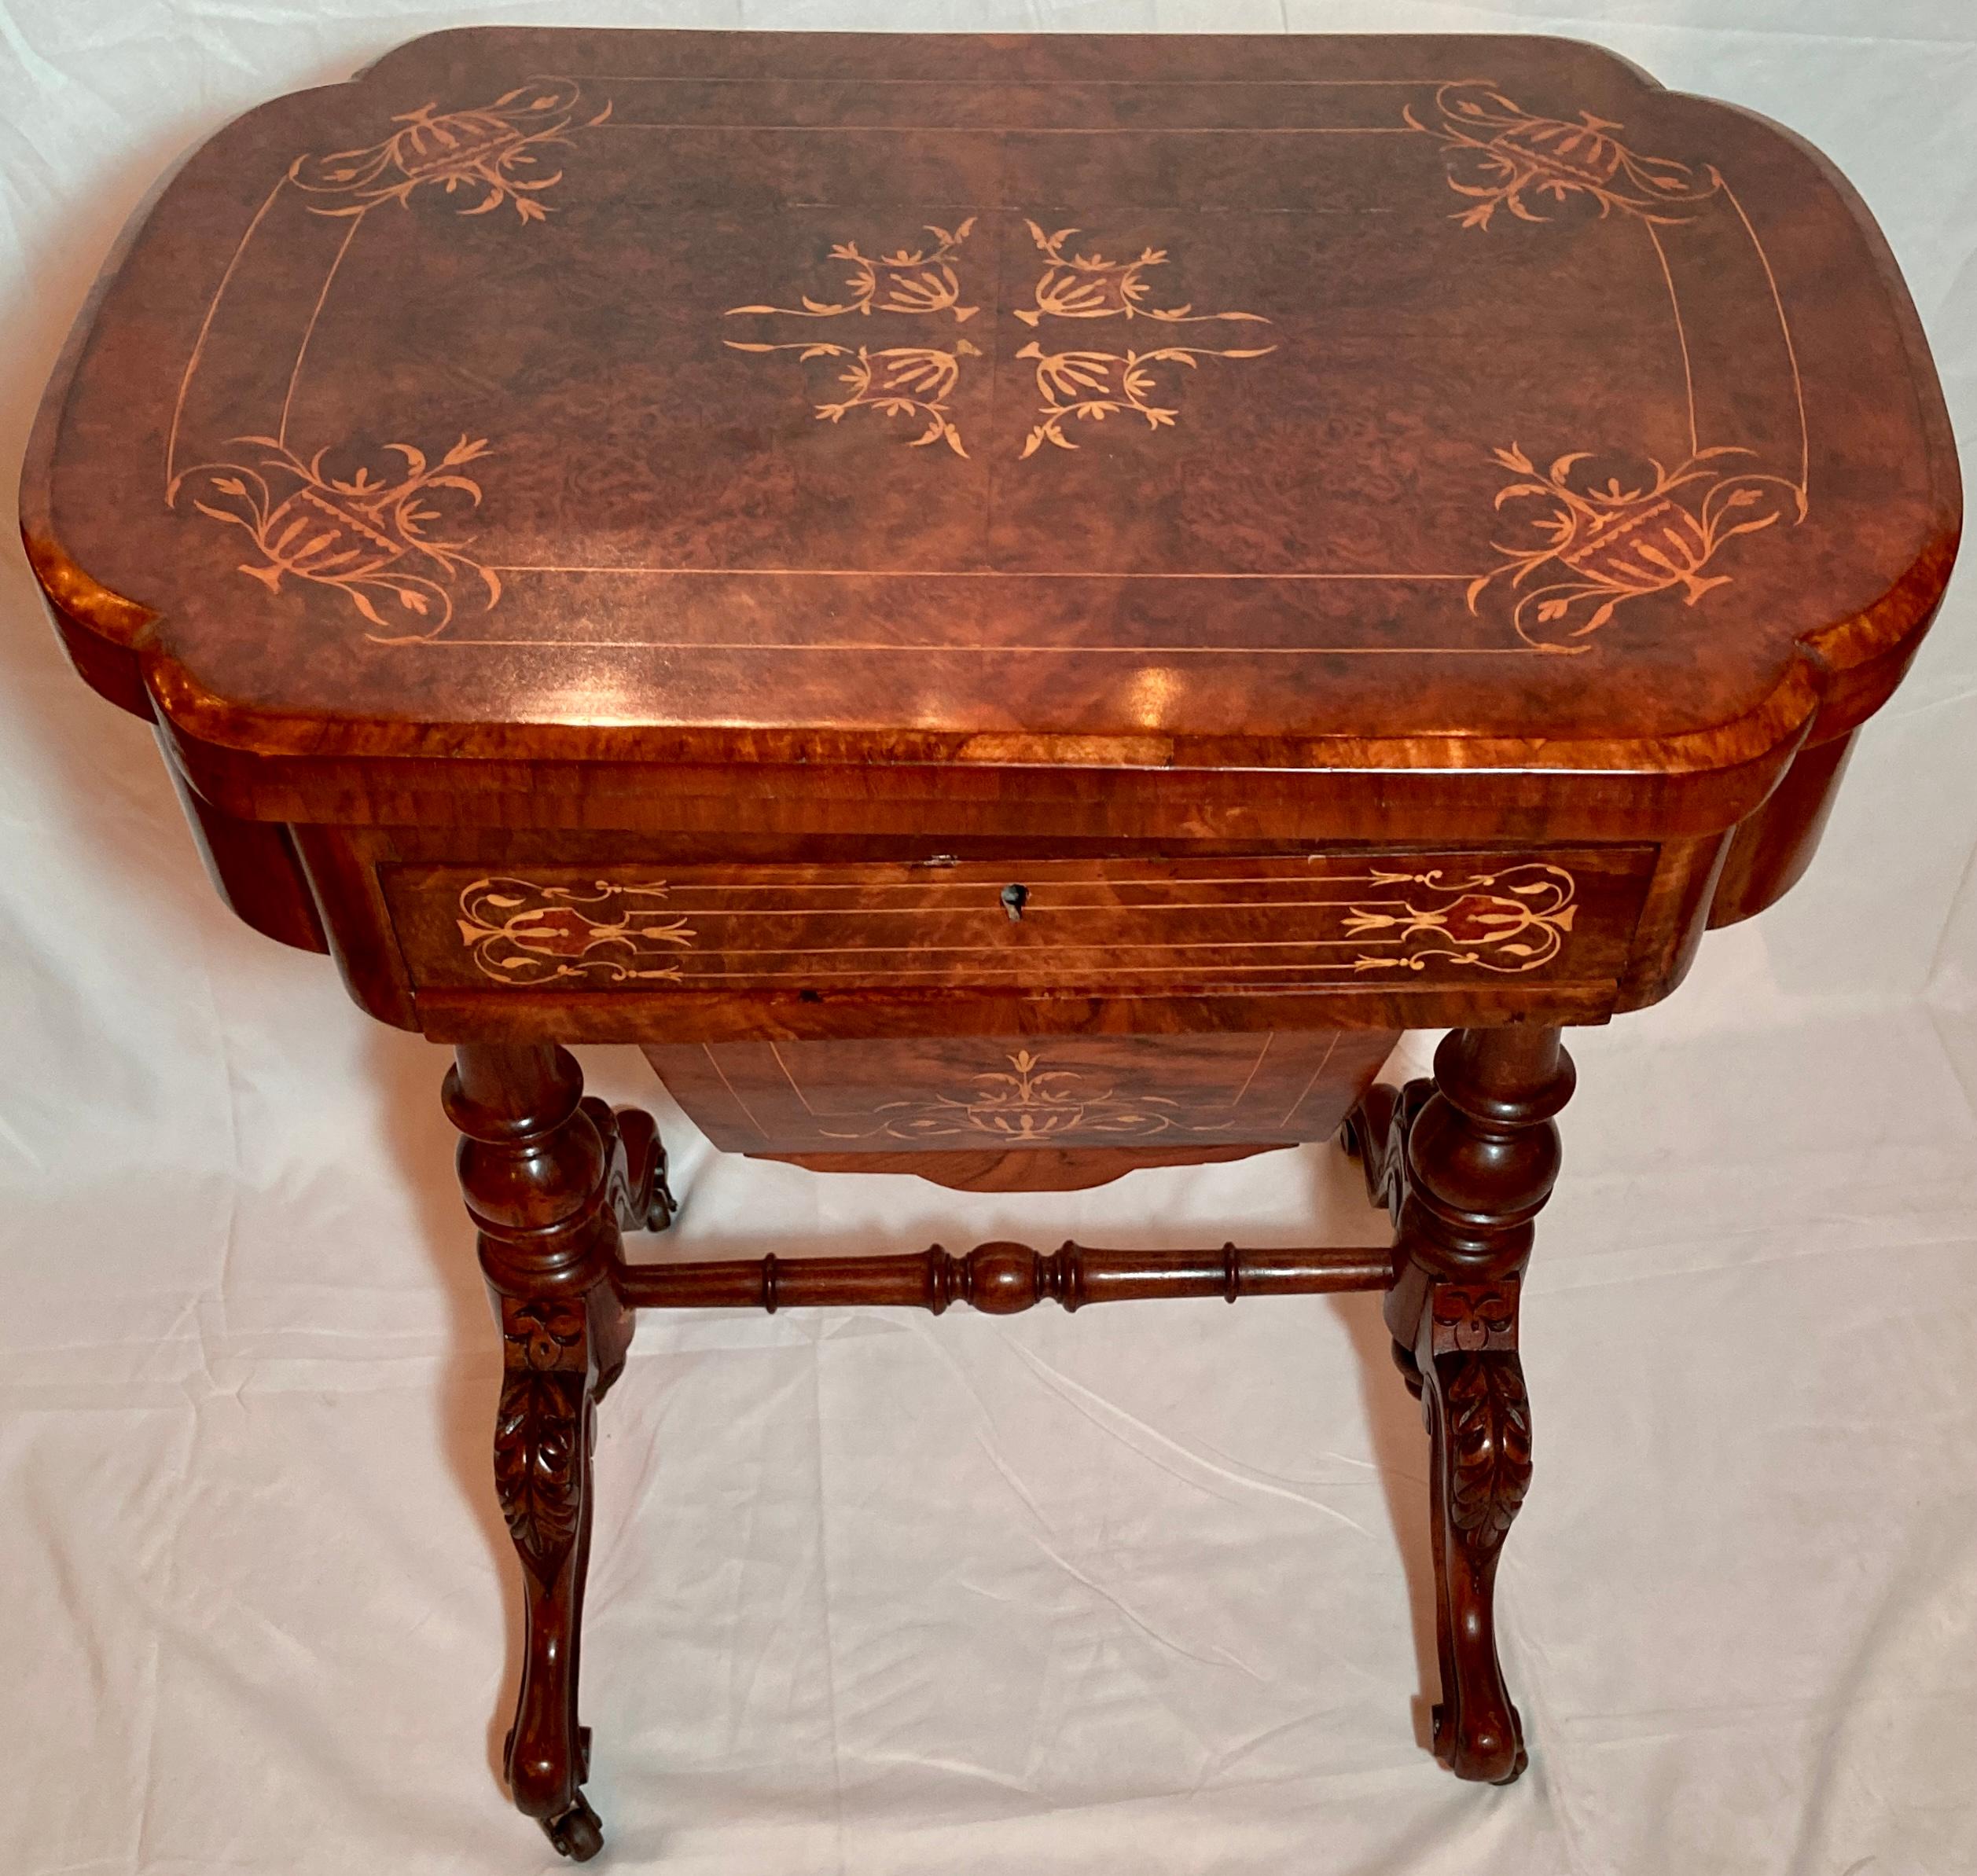 Antique English superb quality burled walnut satinwood inlaid games table, circa 1865-1885.